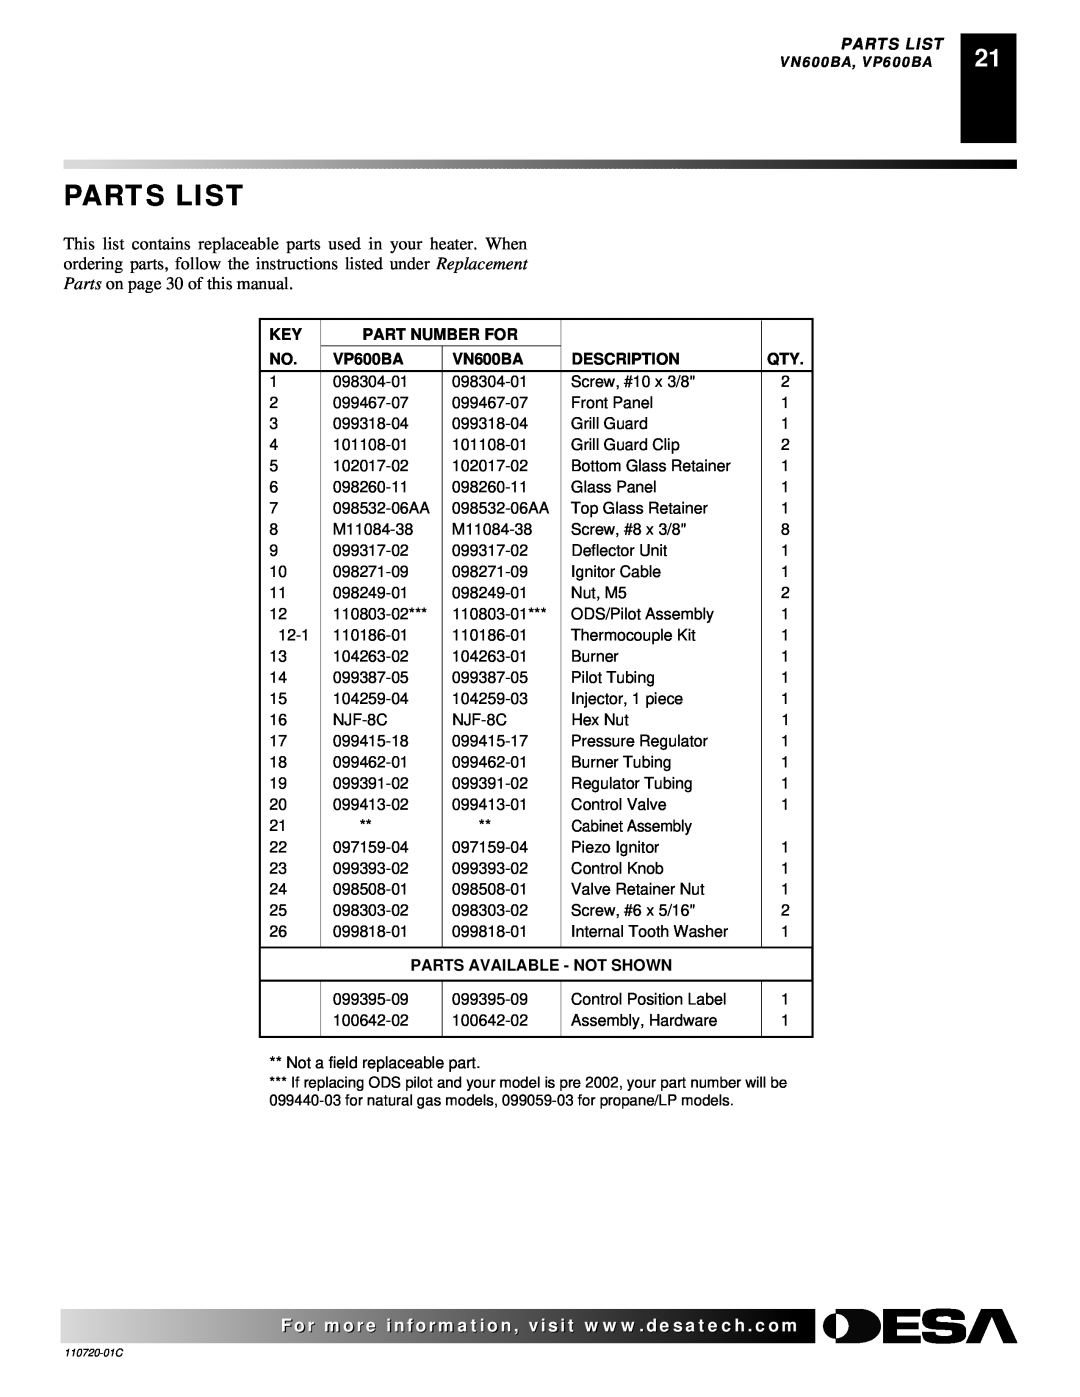 Desa VN10A installation manual Parts List, Part Number For, VP600BA, VN600BA, Description, Parts Available - Not Shown 